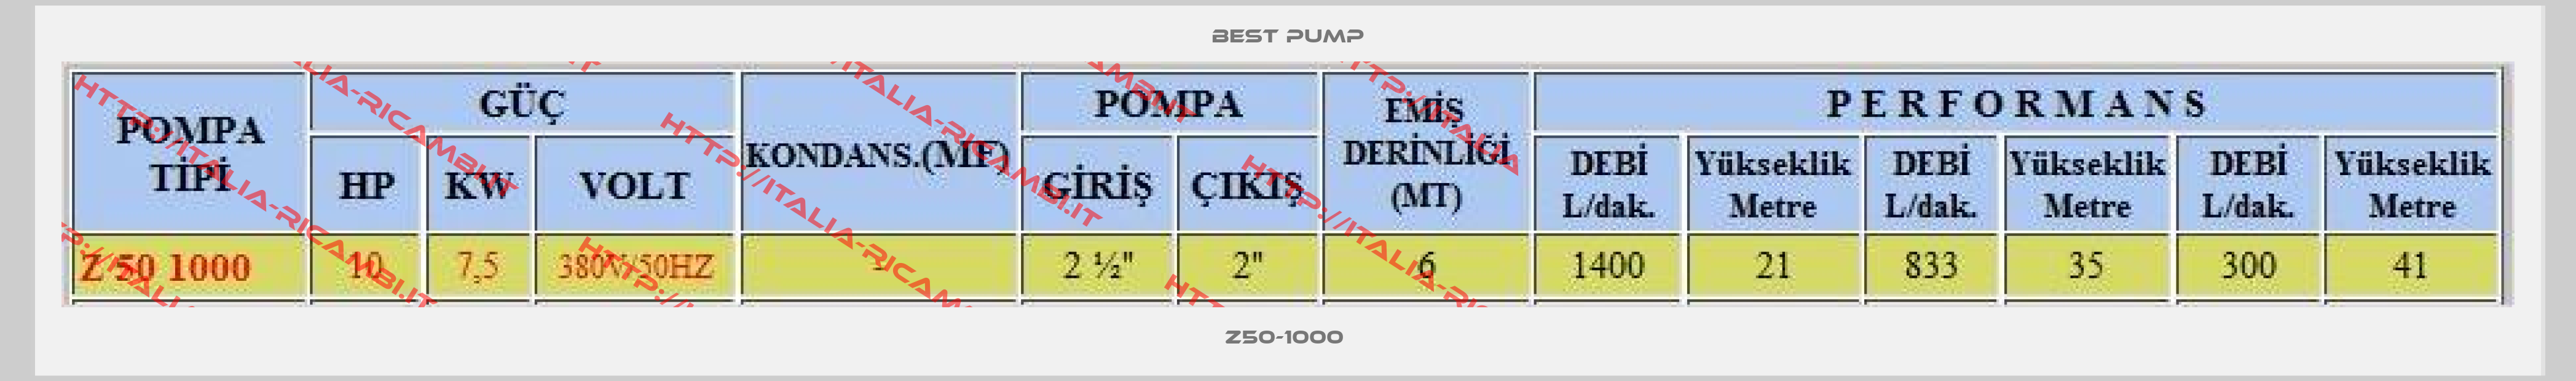 Best Pump-Z50-1000 